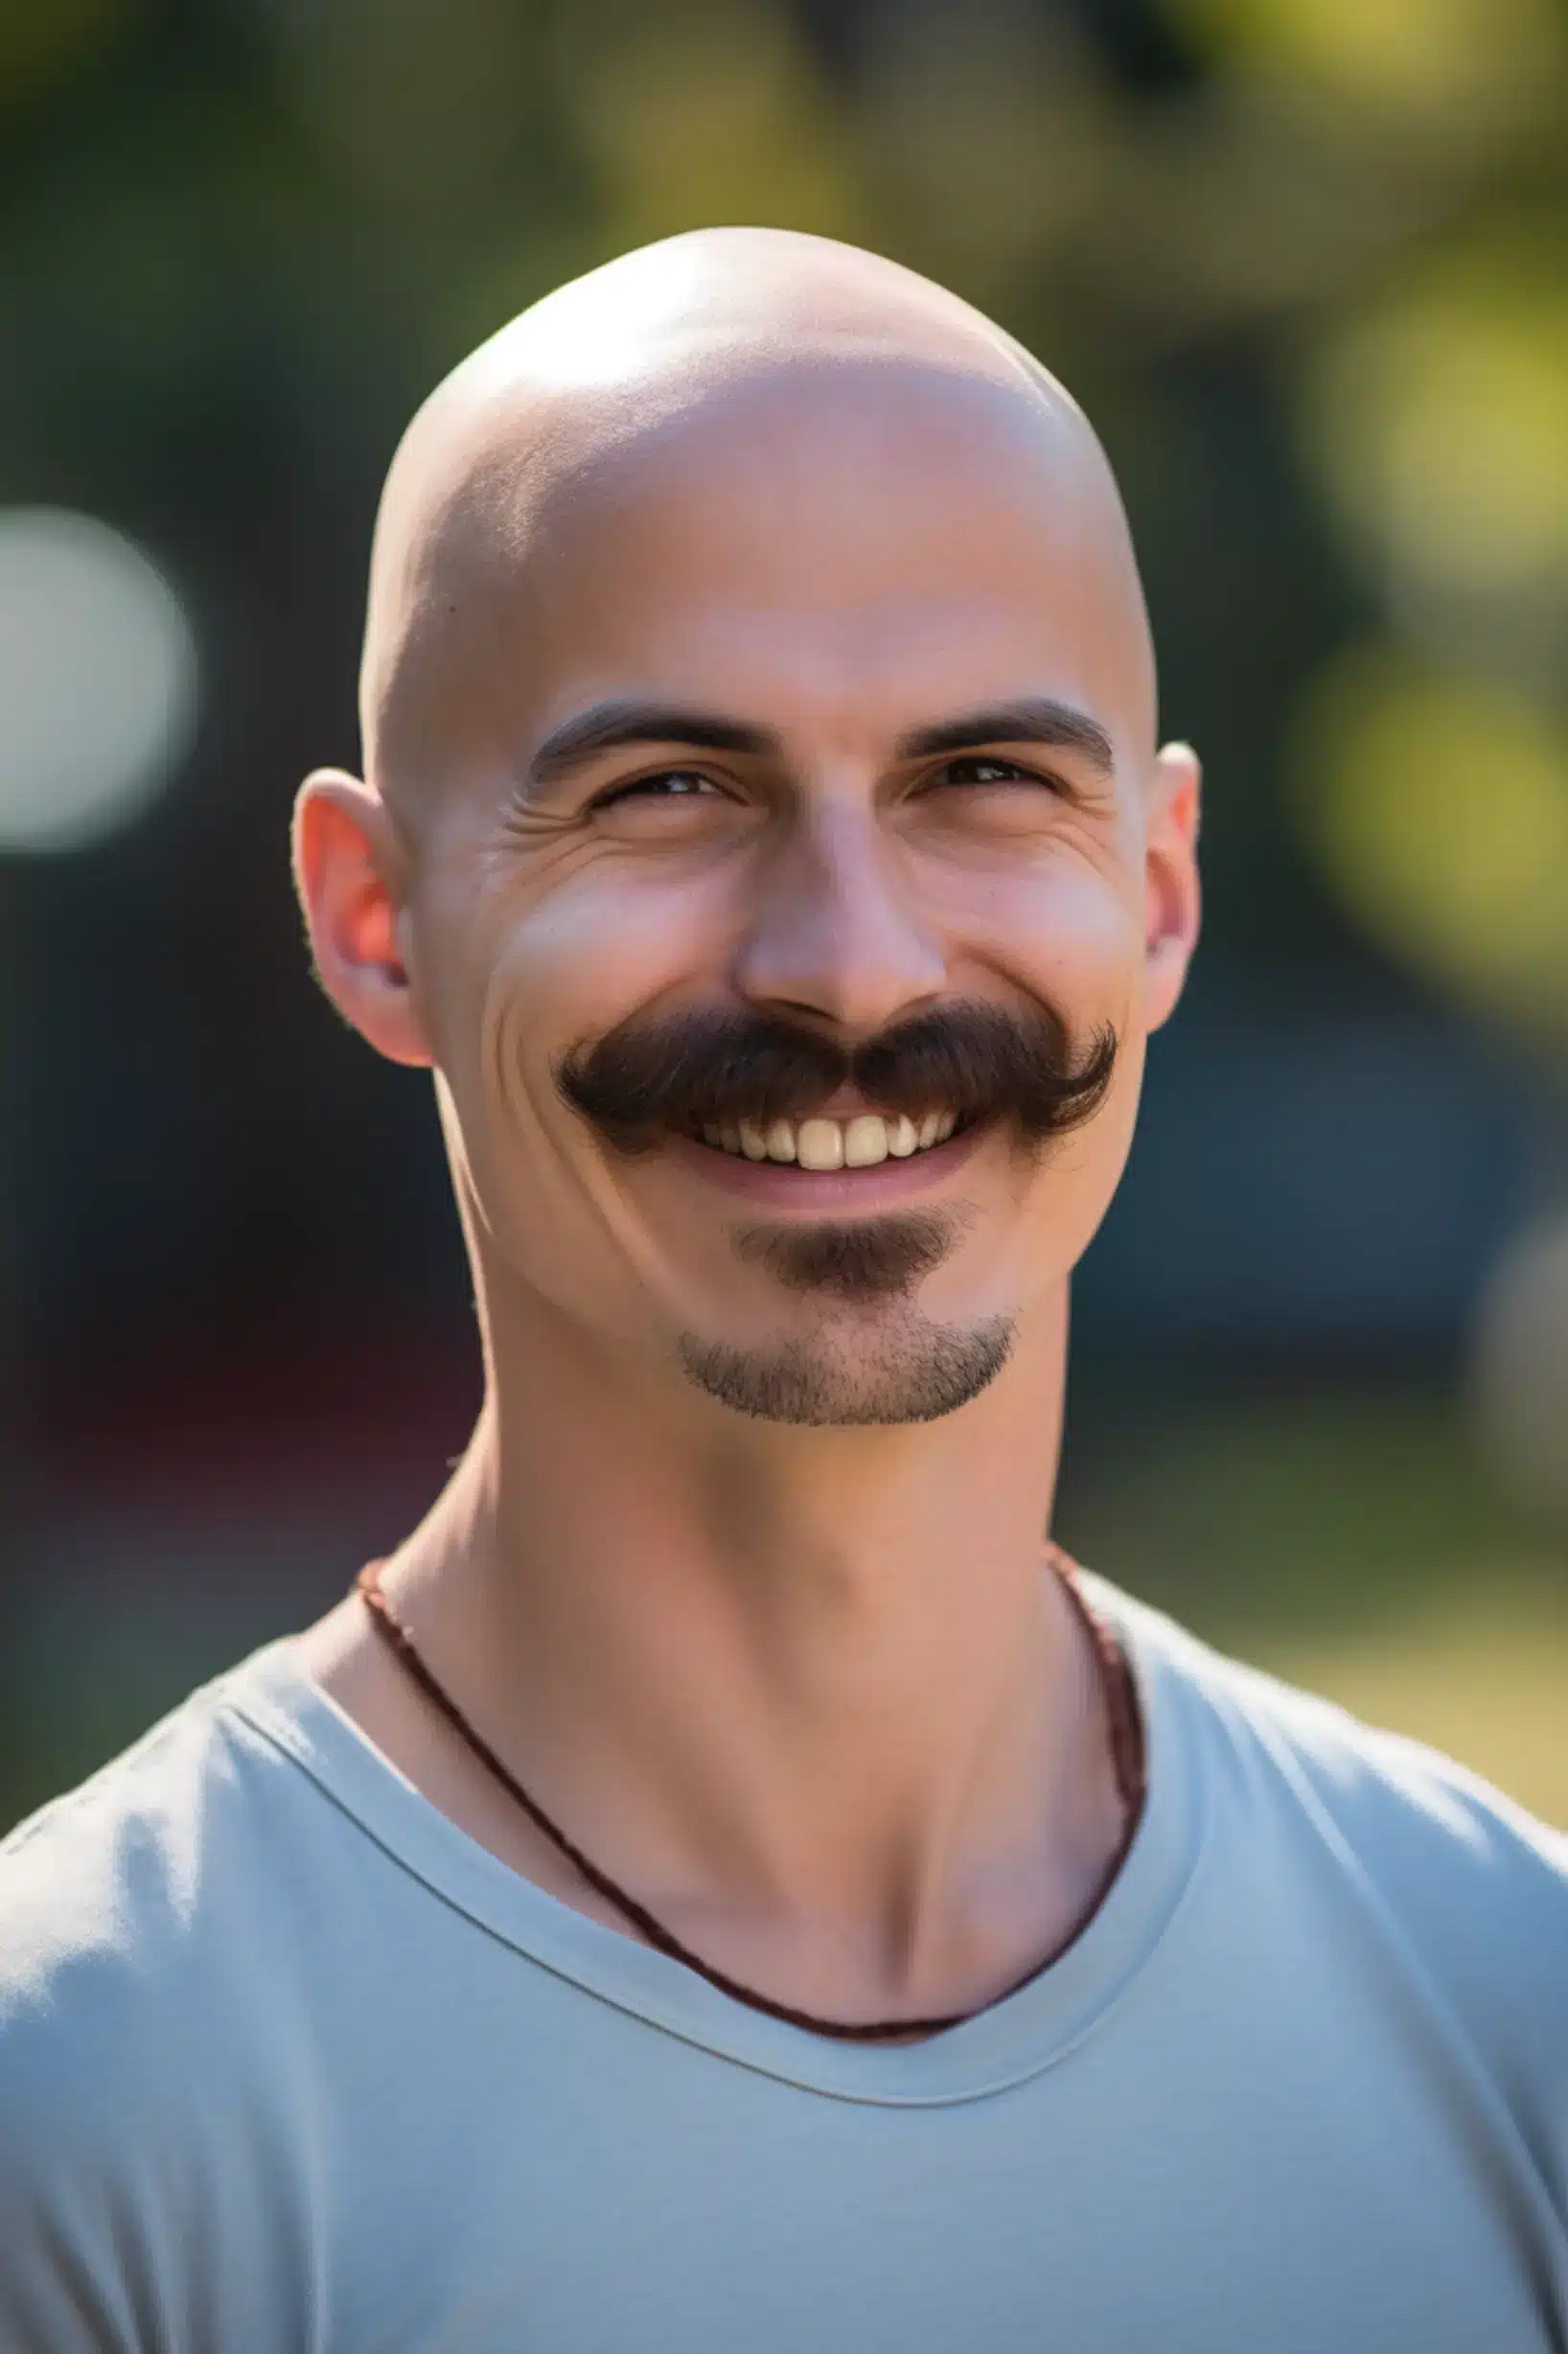 bald man smiling with handlebar mustache